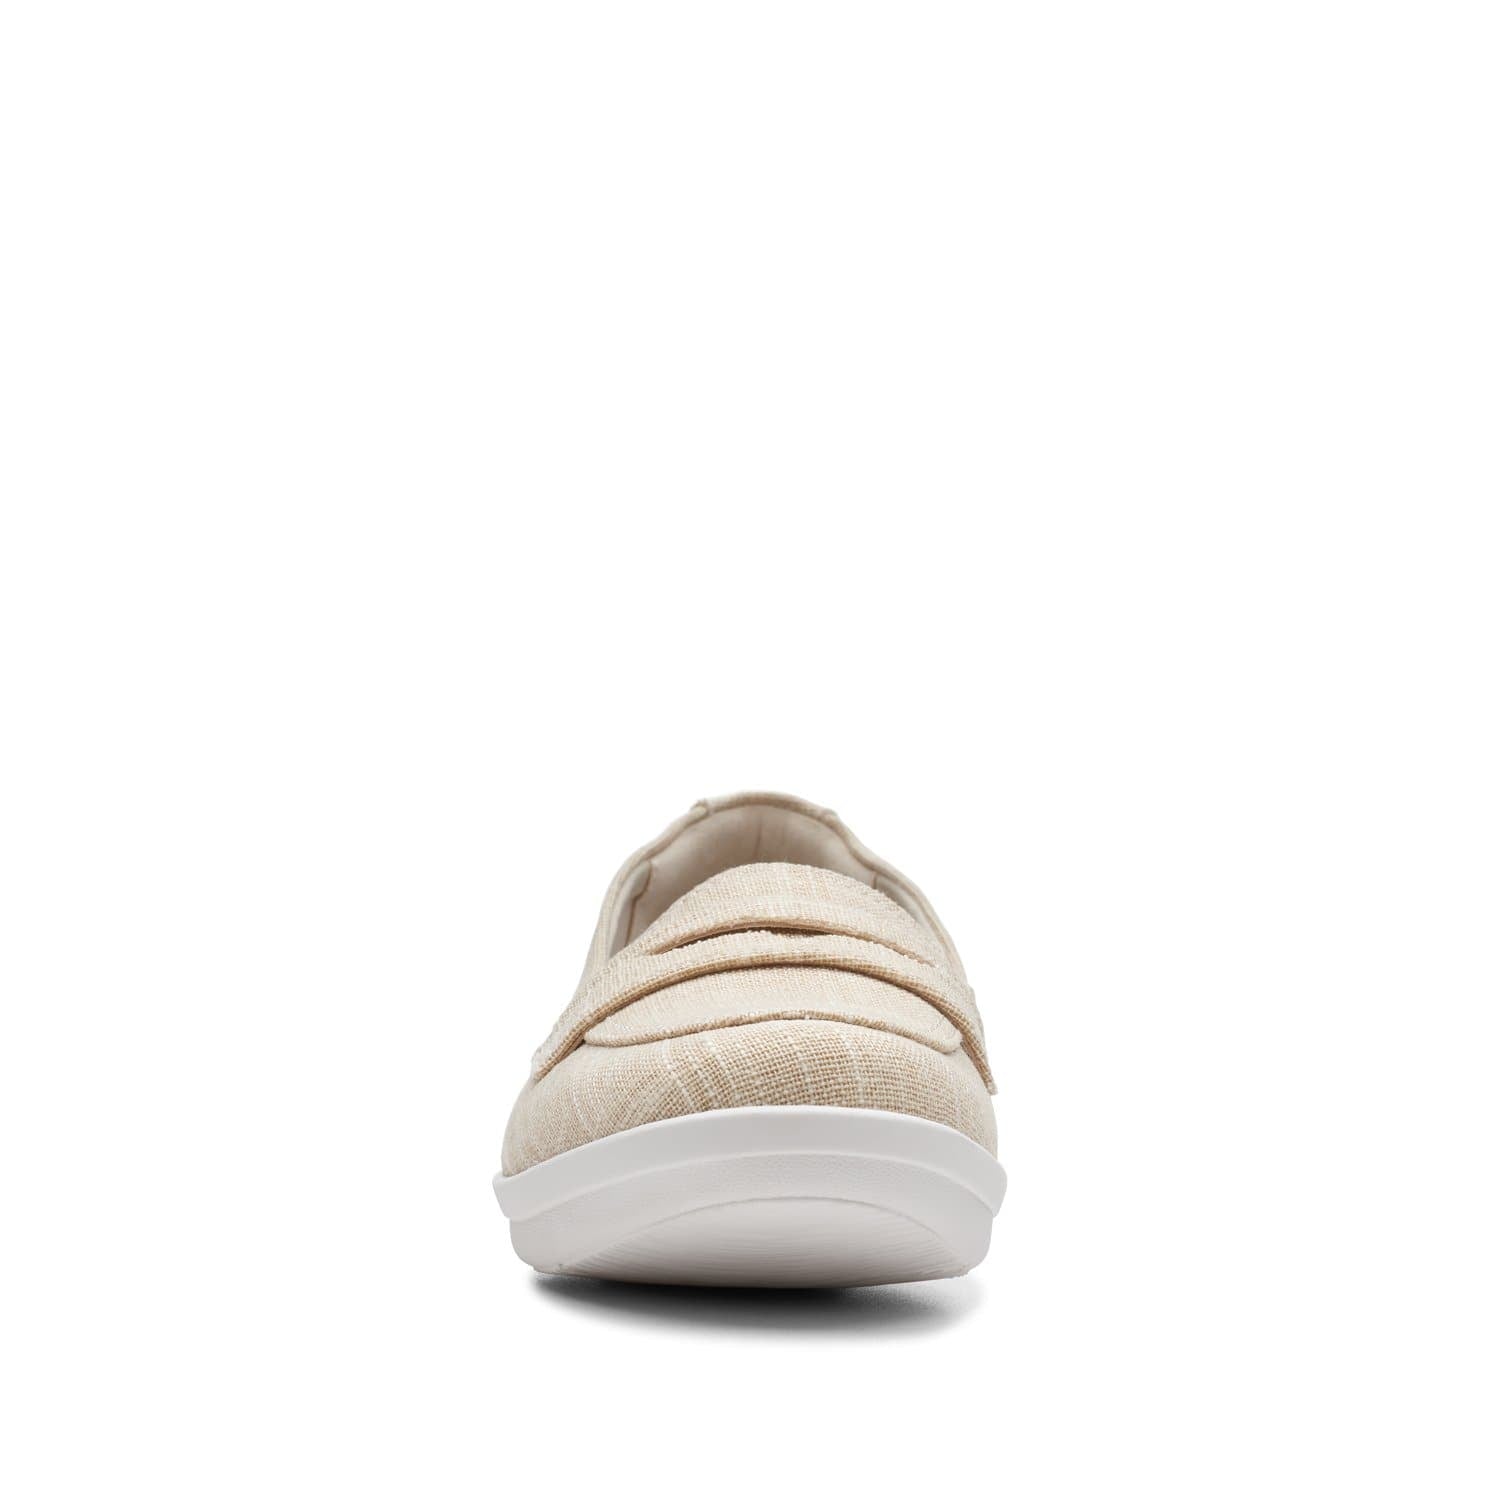 Clarks-Ayla-Form-Women's-Shoes-Natural-Linen-26147499